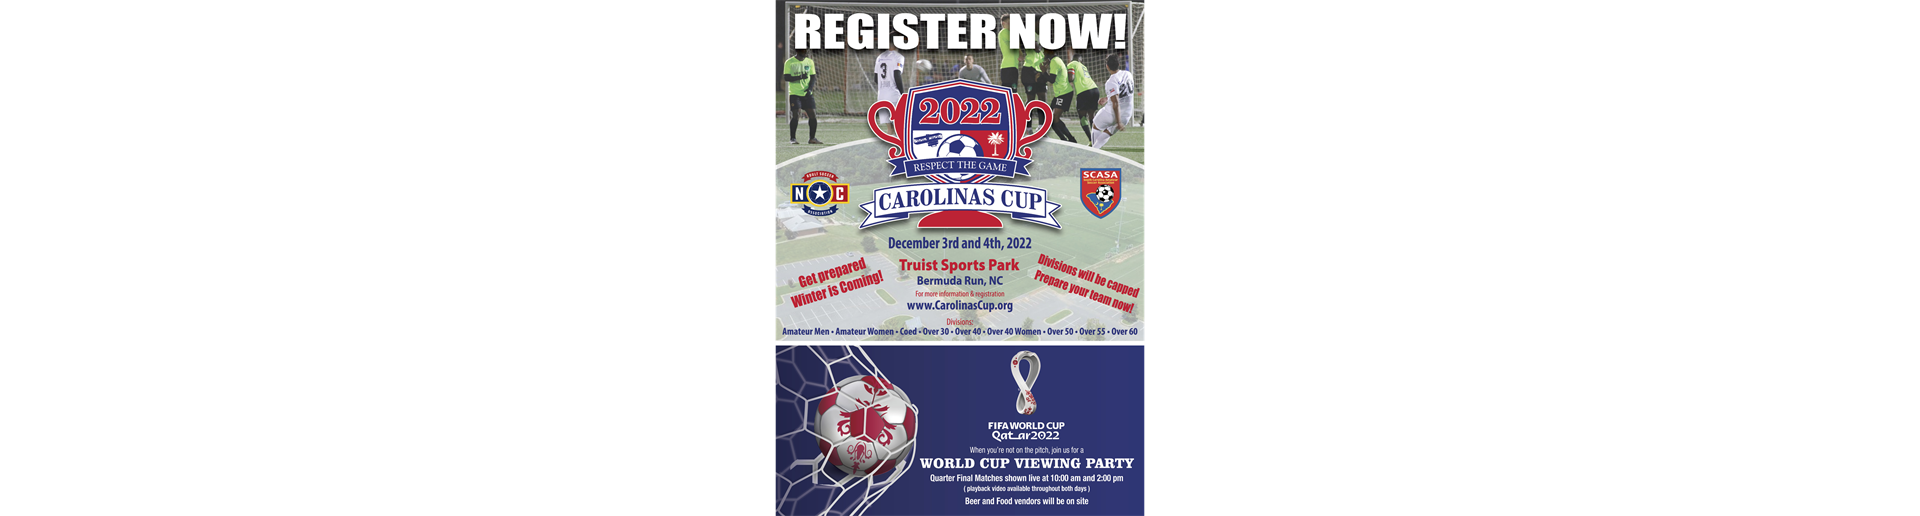 Carolinas Cup Registration is OPEN